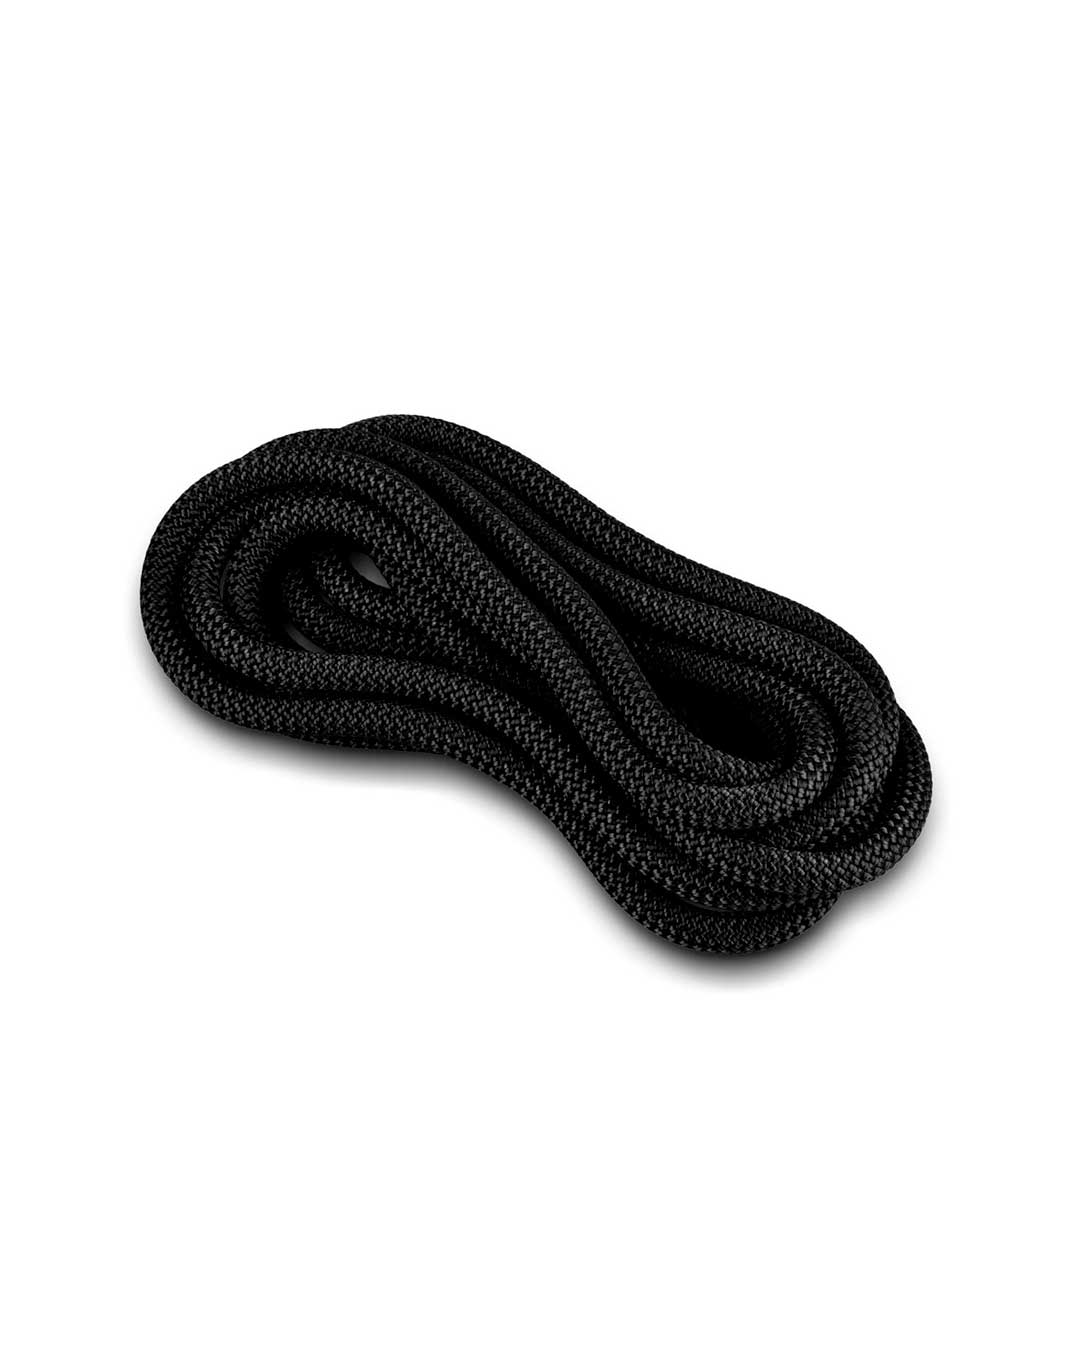 Cuerda de gimnasia rítmica VENTURELLI  (Certificada FIG) negra- 3 m 